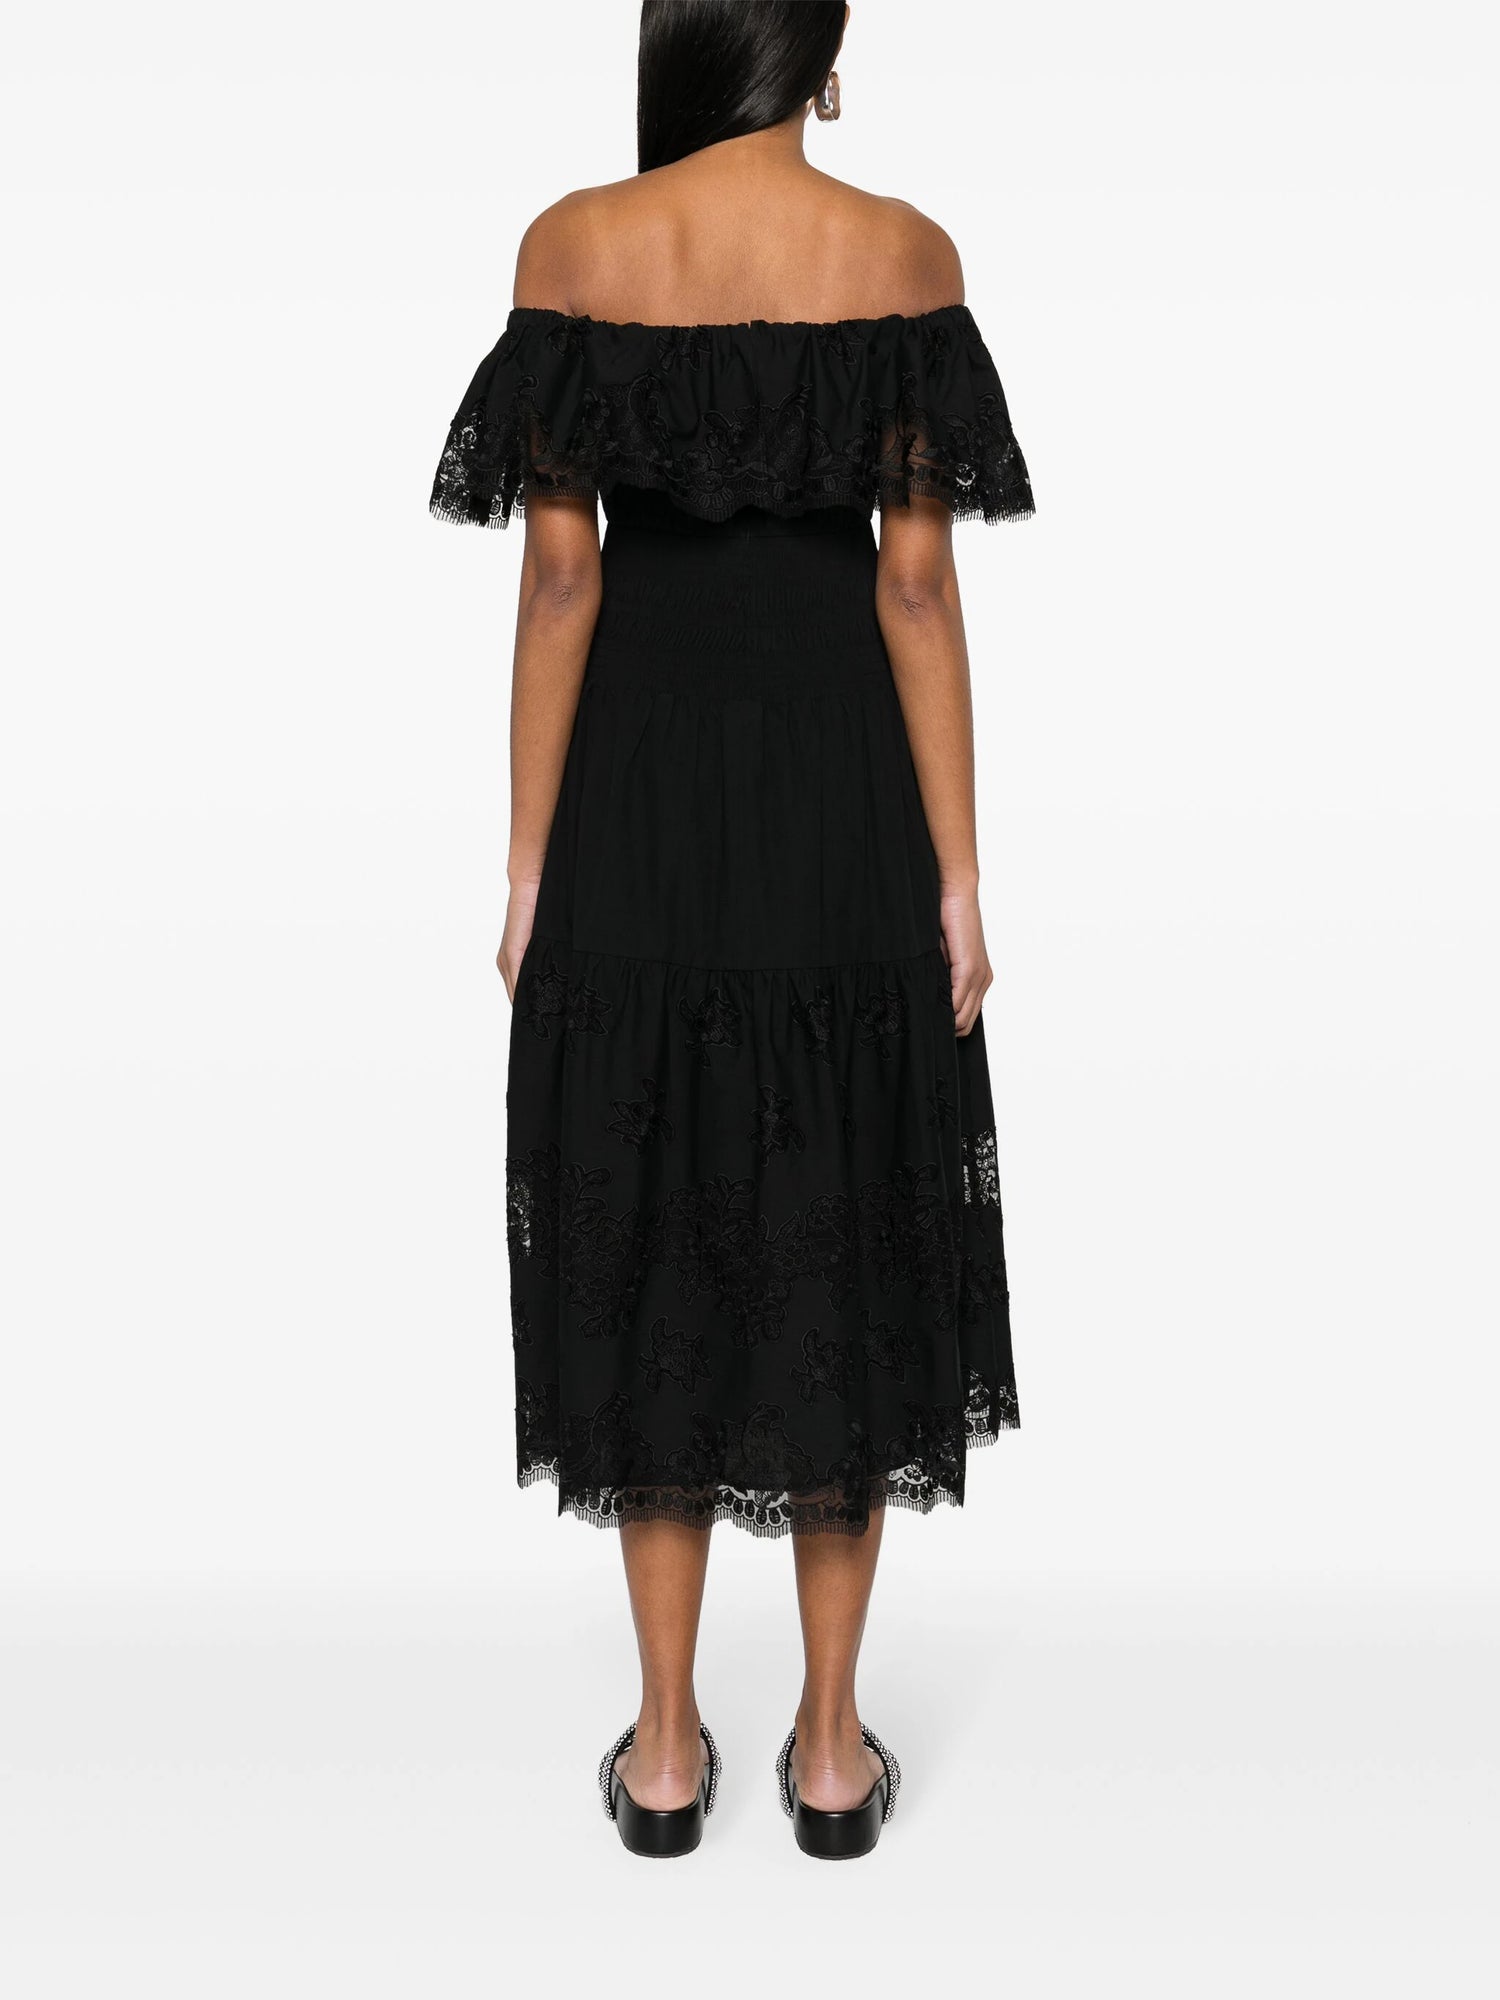 Cotton midi dress with lace, black